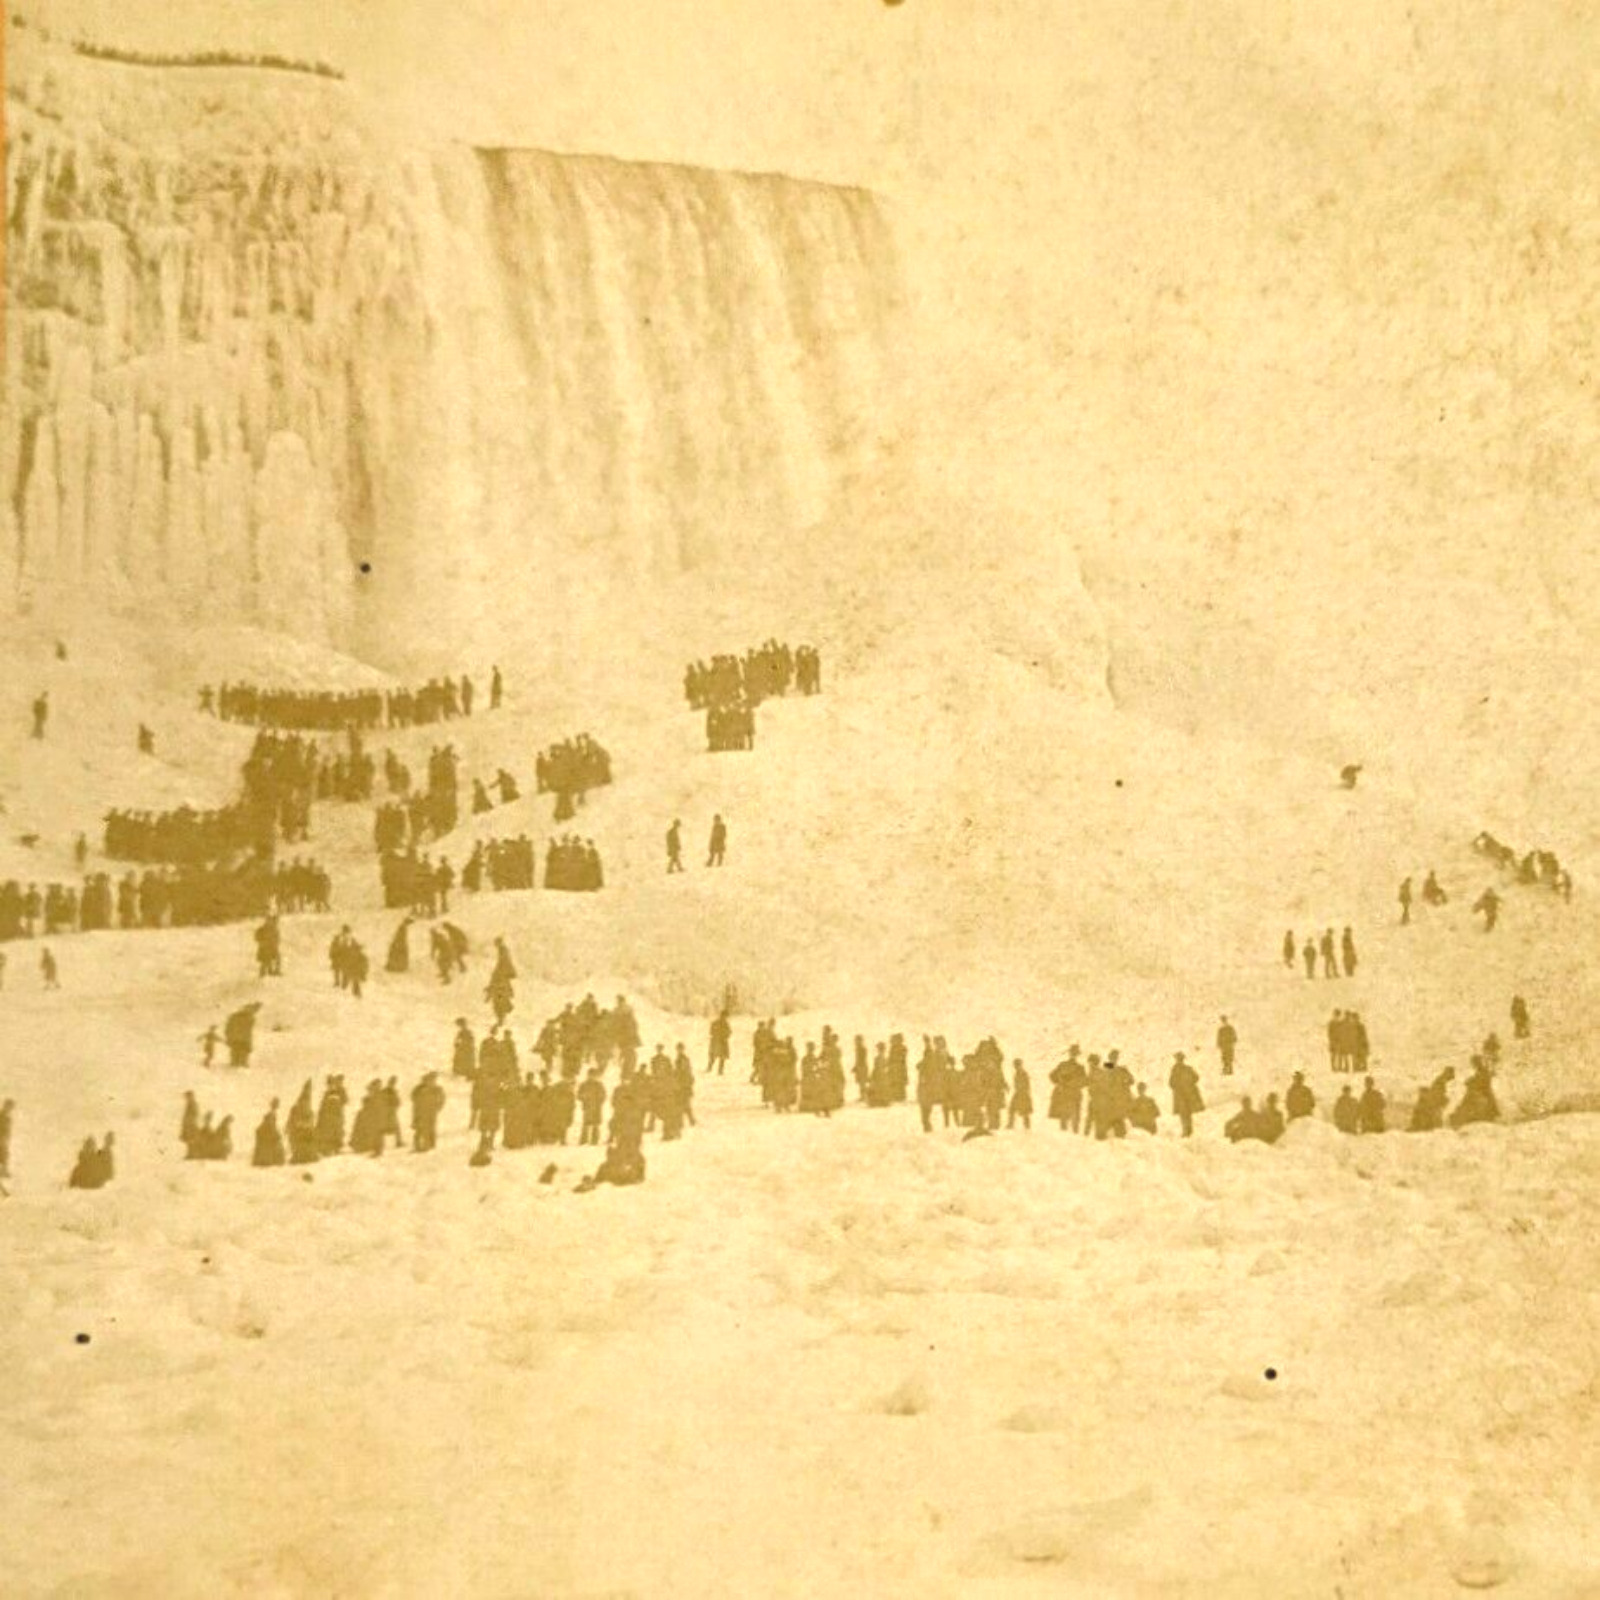 Niagara Falls Waterfalls Stereoview Victorian Crowds Ice Skating Playing on Snow